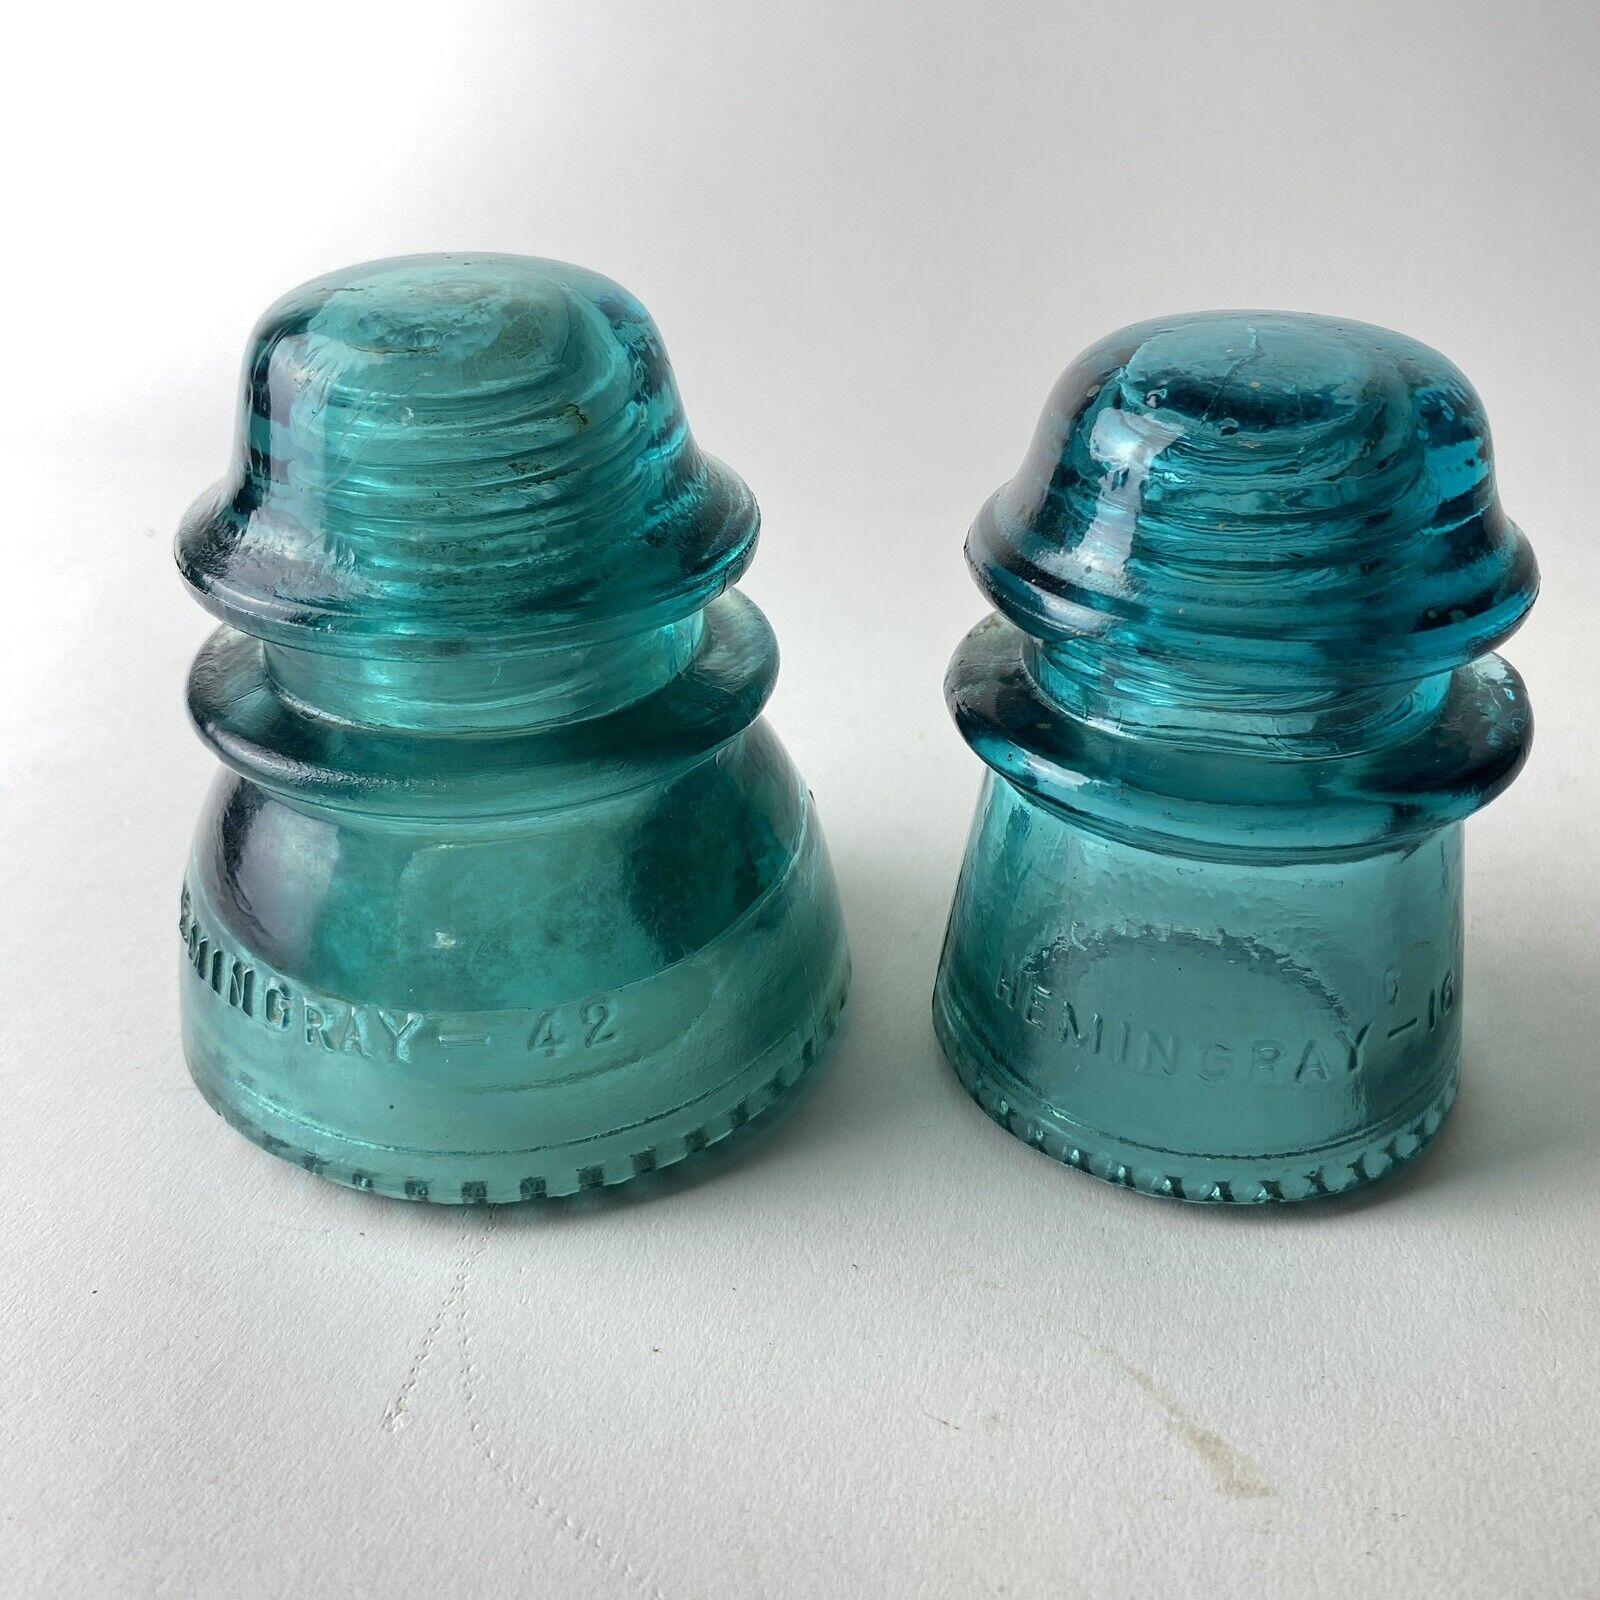 Vintage Hemingray  42 & 16 Clear Aqua Blue Glass Telegraph Insulator U.S.A. Lot